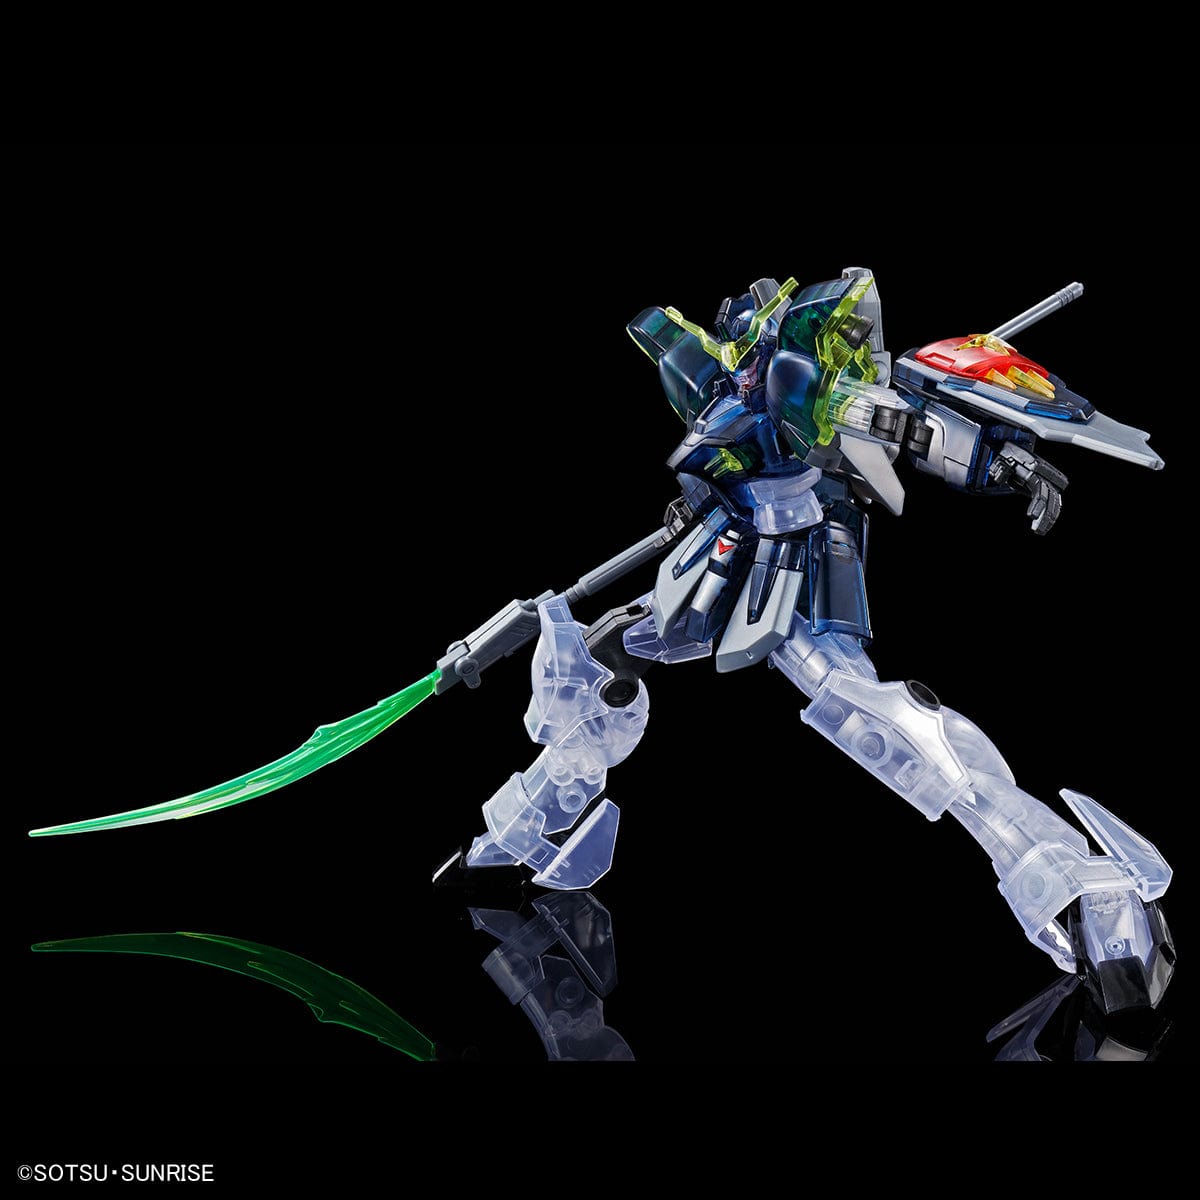 Mobile Suit Gundam Wing Toys & Hobbies: Models & Kits:Science Fiction:Gundam HG XXXG-01D GUNDAM DEATHSCYTHE [CLEAR COLOR]